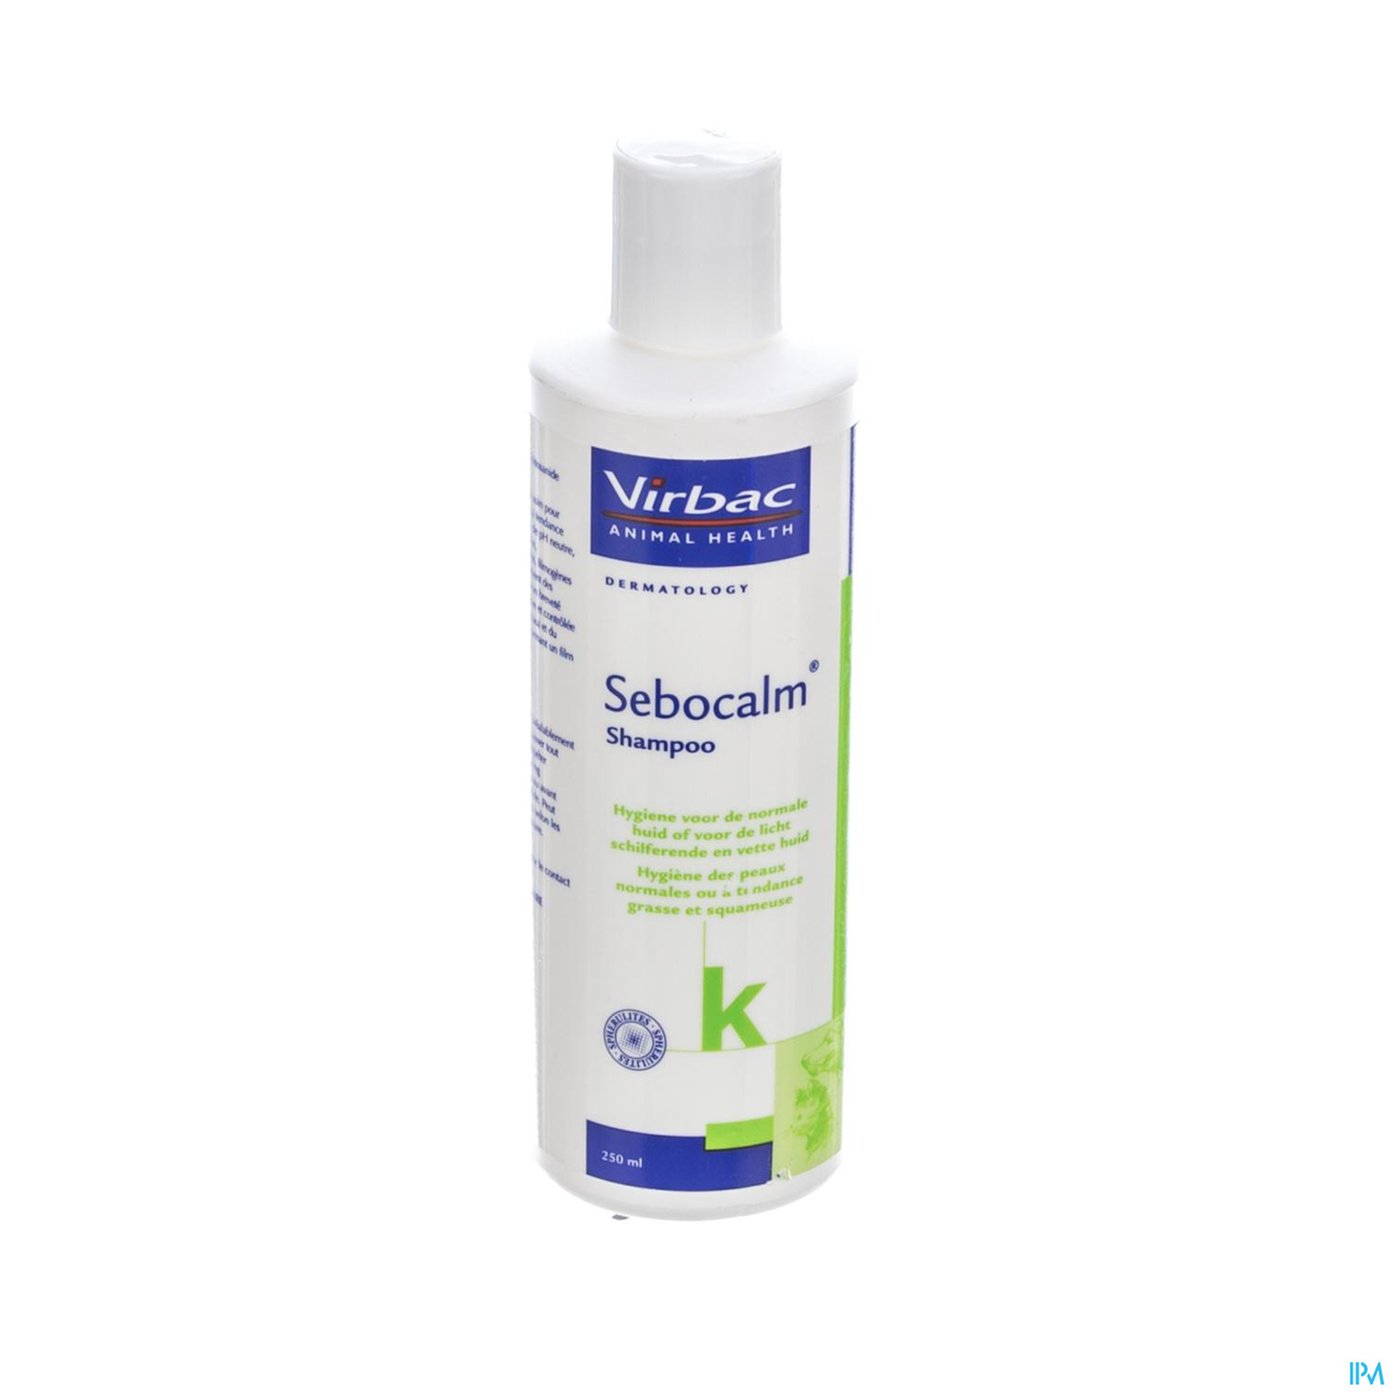 Allerderm Sebocalm Shampoo Nh/dh 250ml packshot